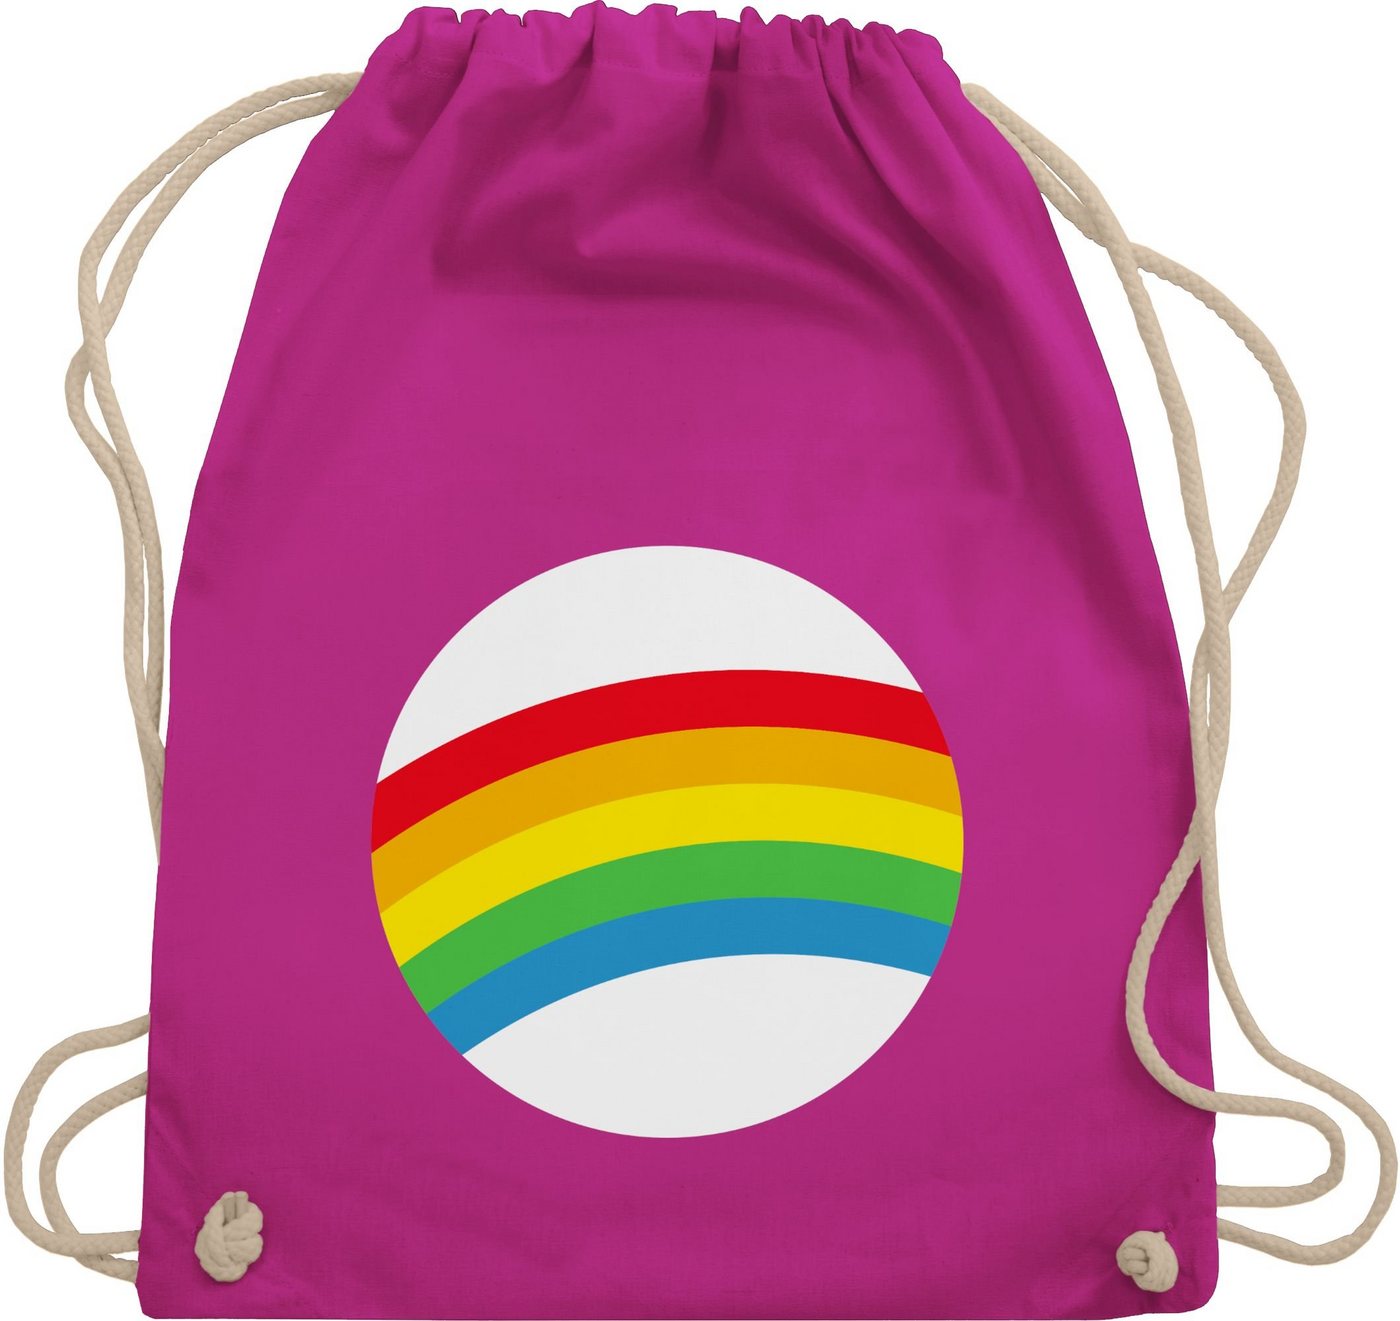 Shirtracer Turnbeutel Glücksbär Regenbogen Rainbow LGBTQ Gay Pride Vielfalt Toleranz, Karneval & Fasching von Shirtracer